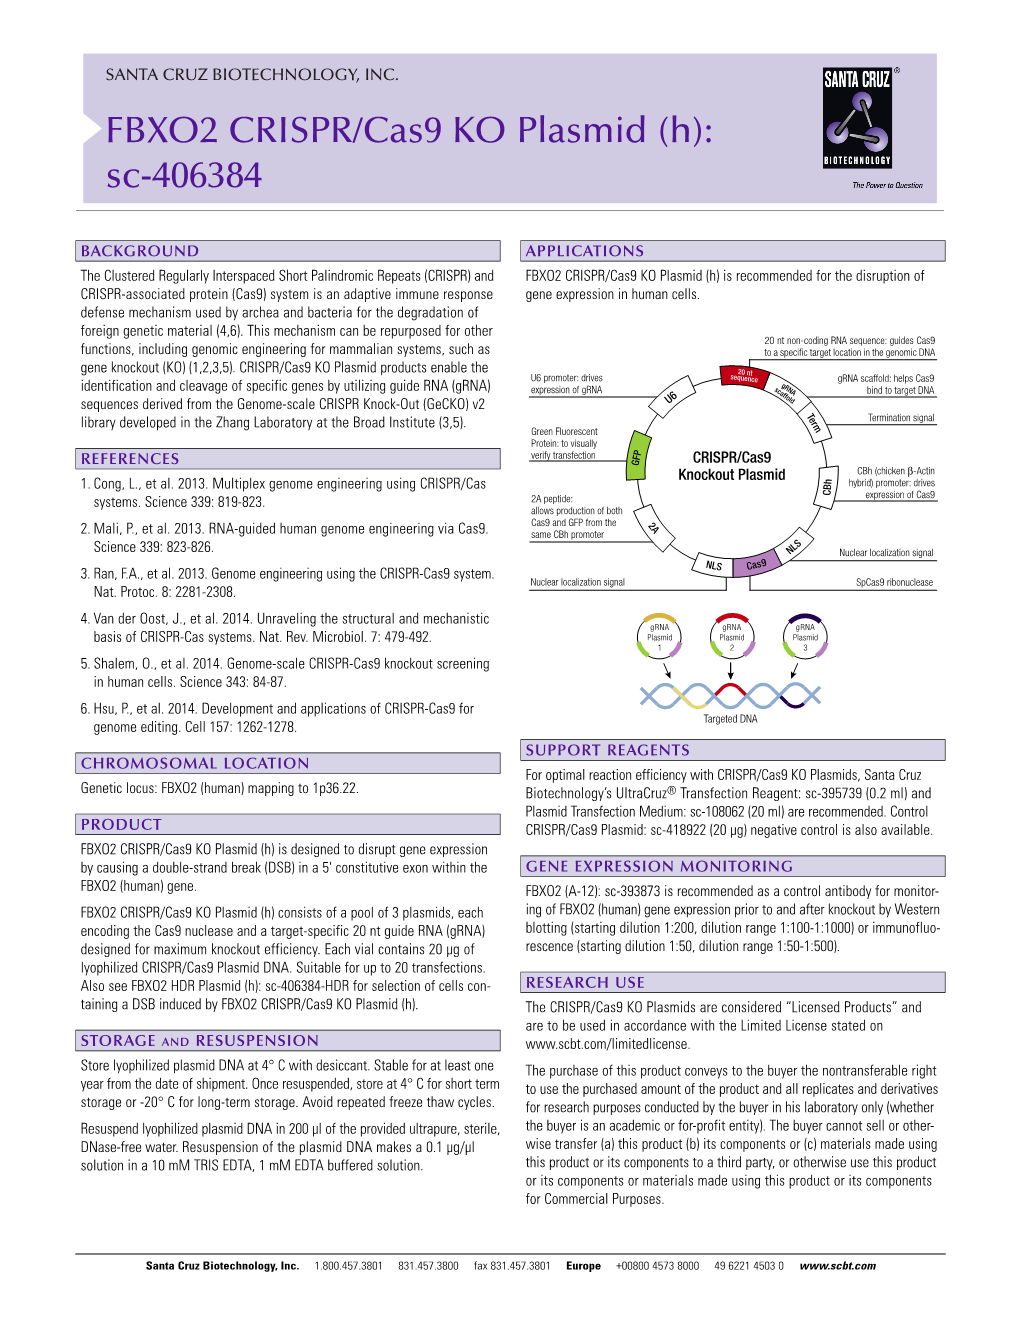 FBXO2 CRISPR/Cas9 KO Plasmid (H): Sc-406384